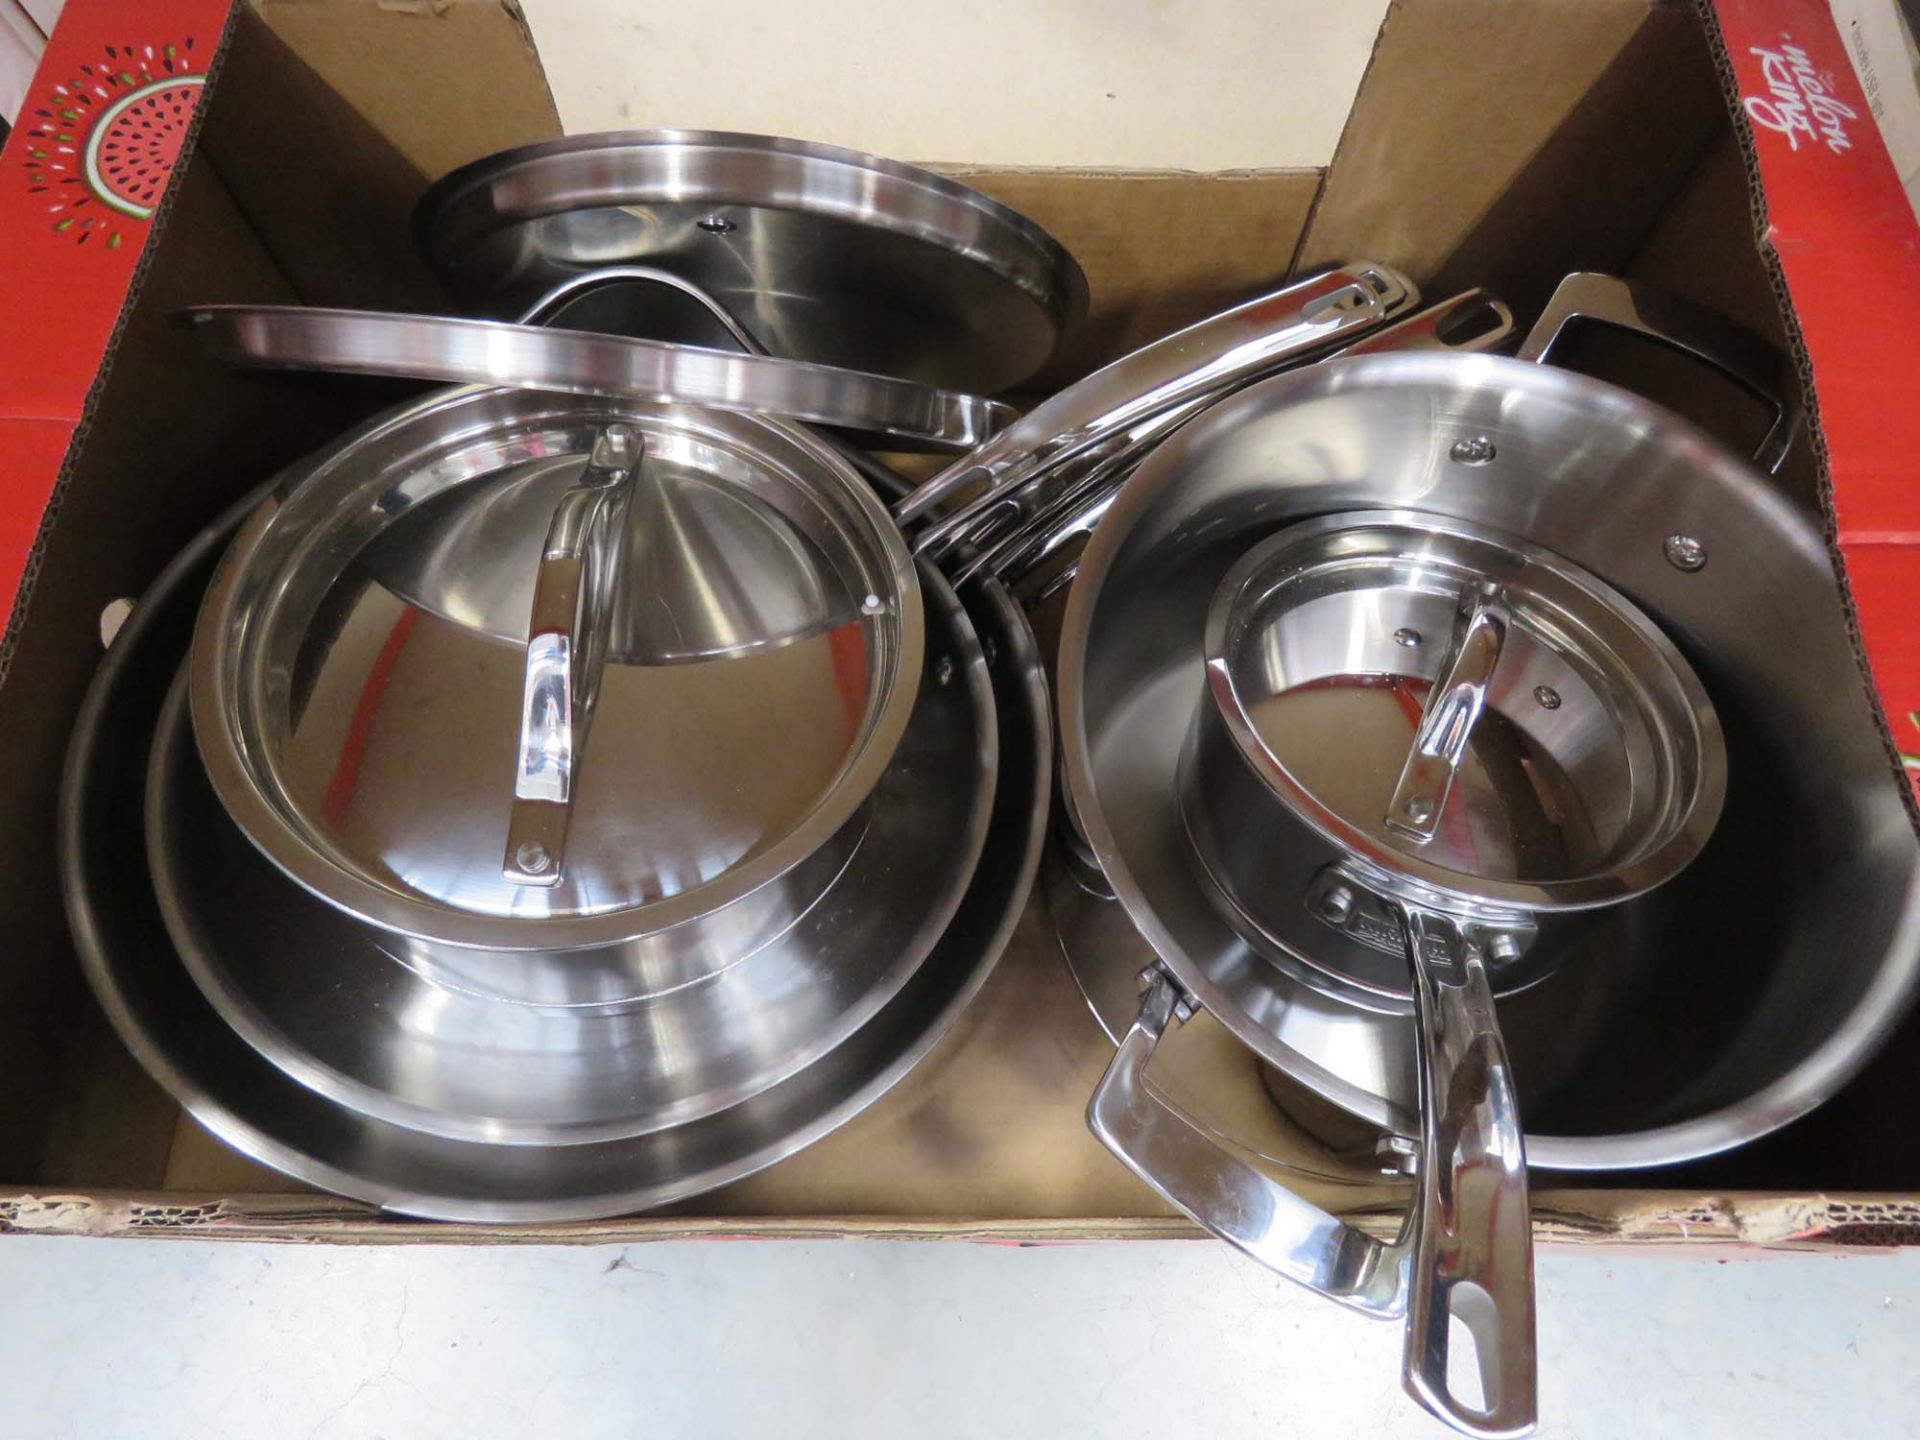 Tray containing mixed Kirkland pots and pans